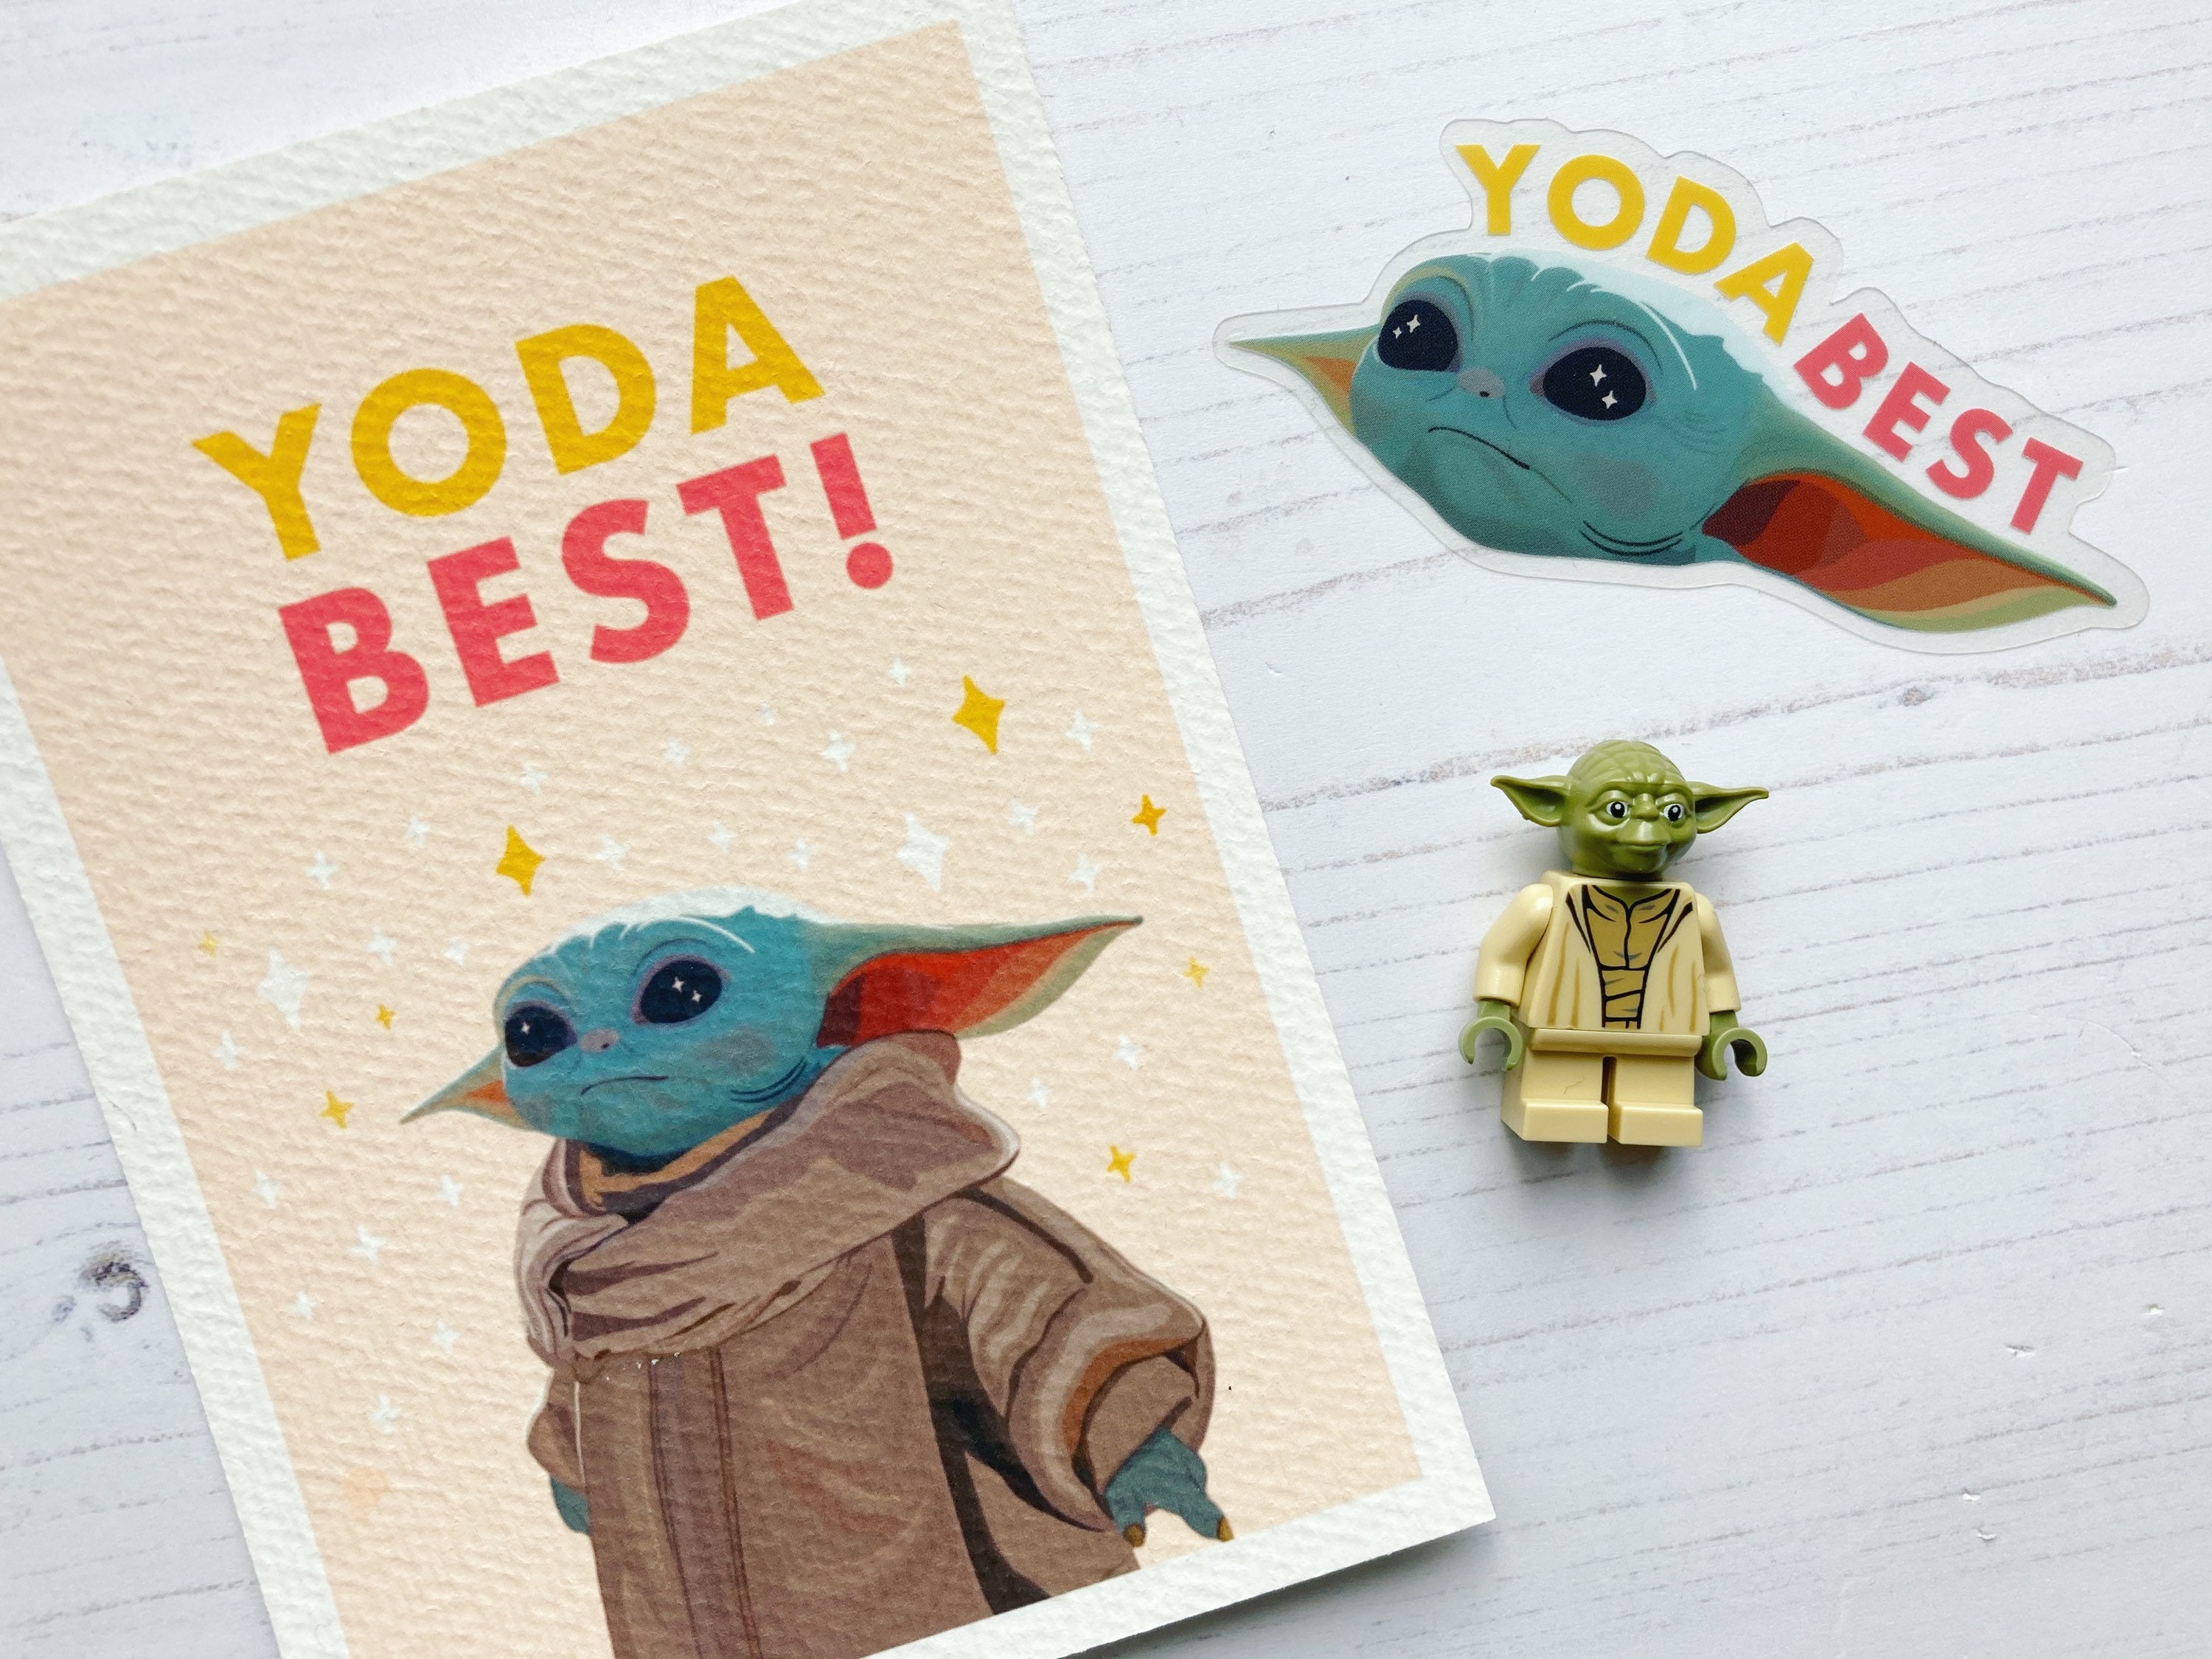 Sticker décoratif Star Wars Maître Yoda, brun, 70 cm x 100 cm